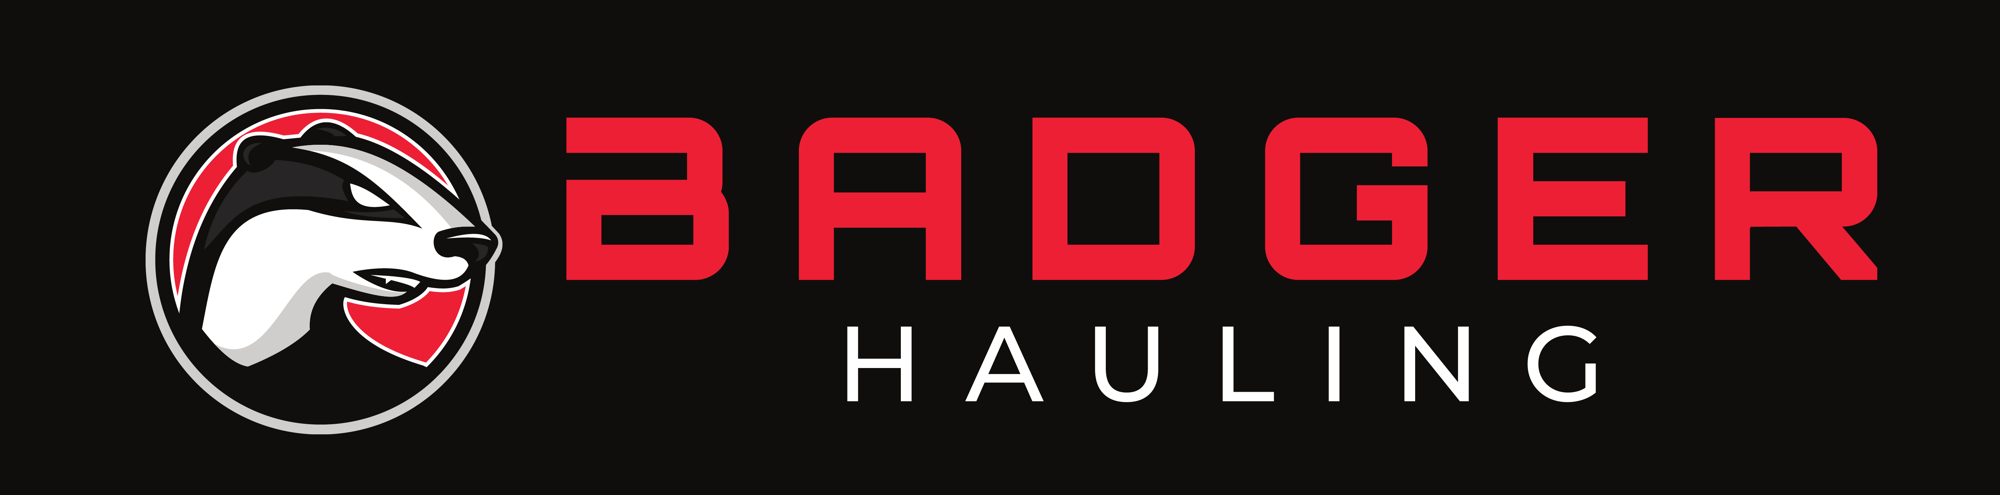 Badger Hauling Logo-black-03-1